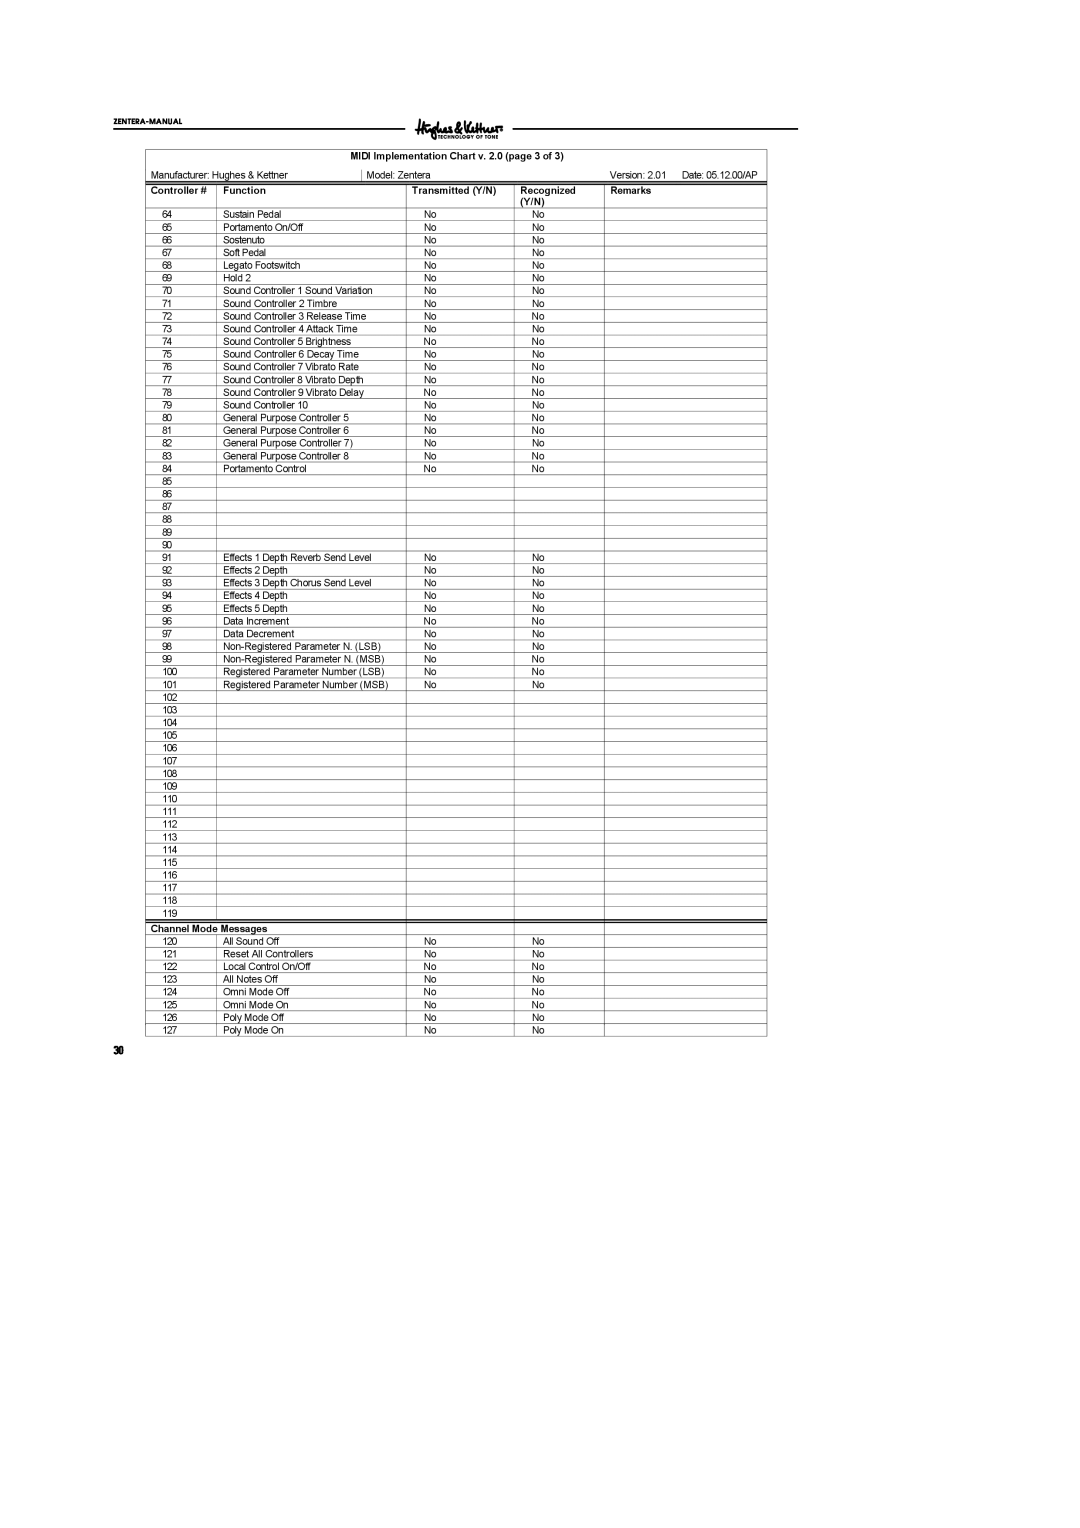 Hughes & Kettner DSM manual MIDI Implementation Chart v. 2.0, Controller #, Function, Transmitted Y/N, Recognized, Remarks 